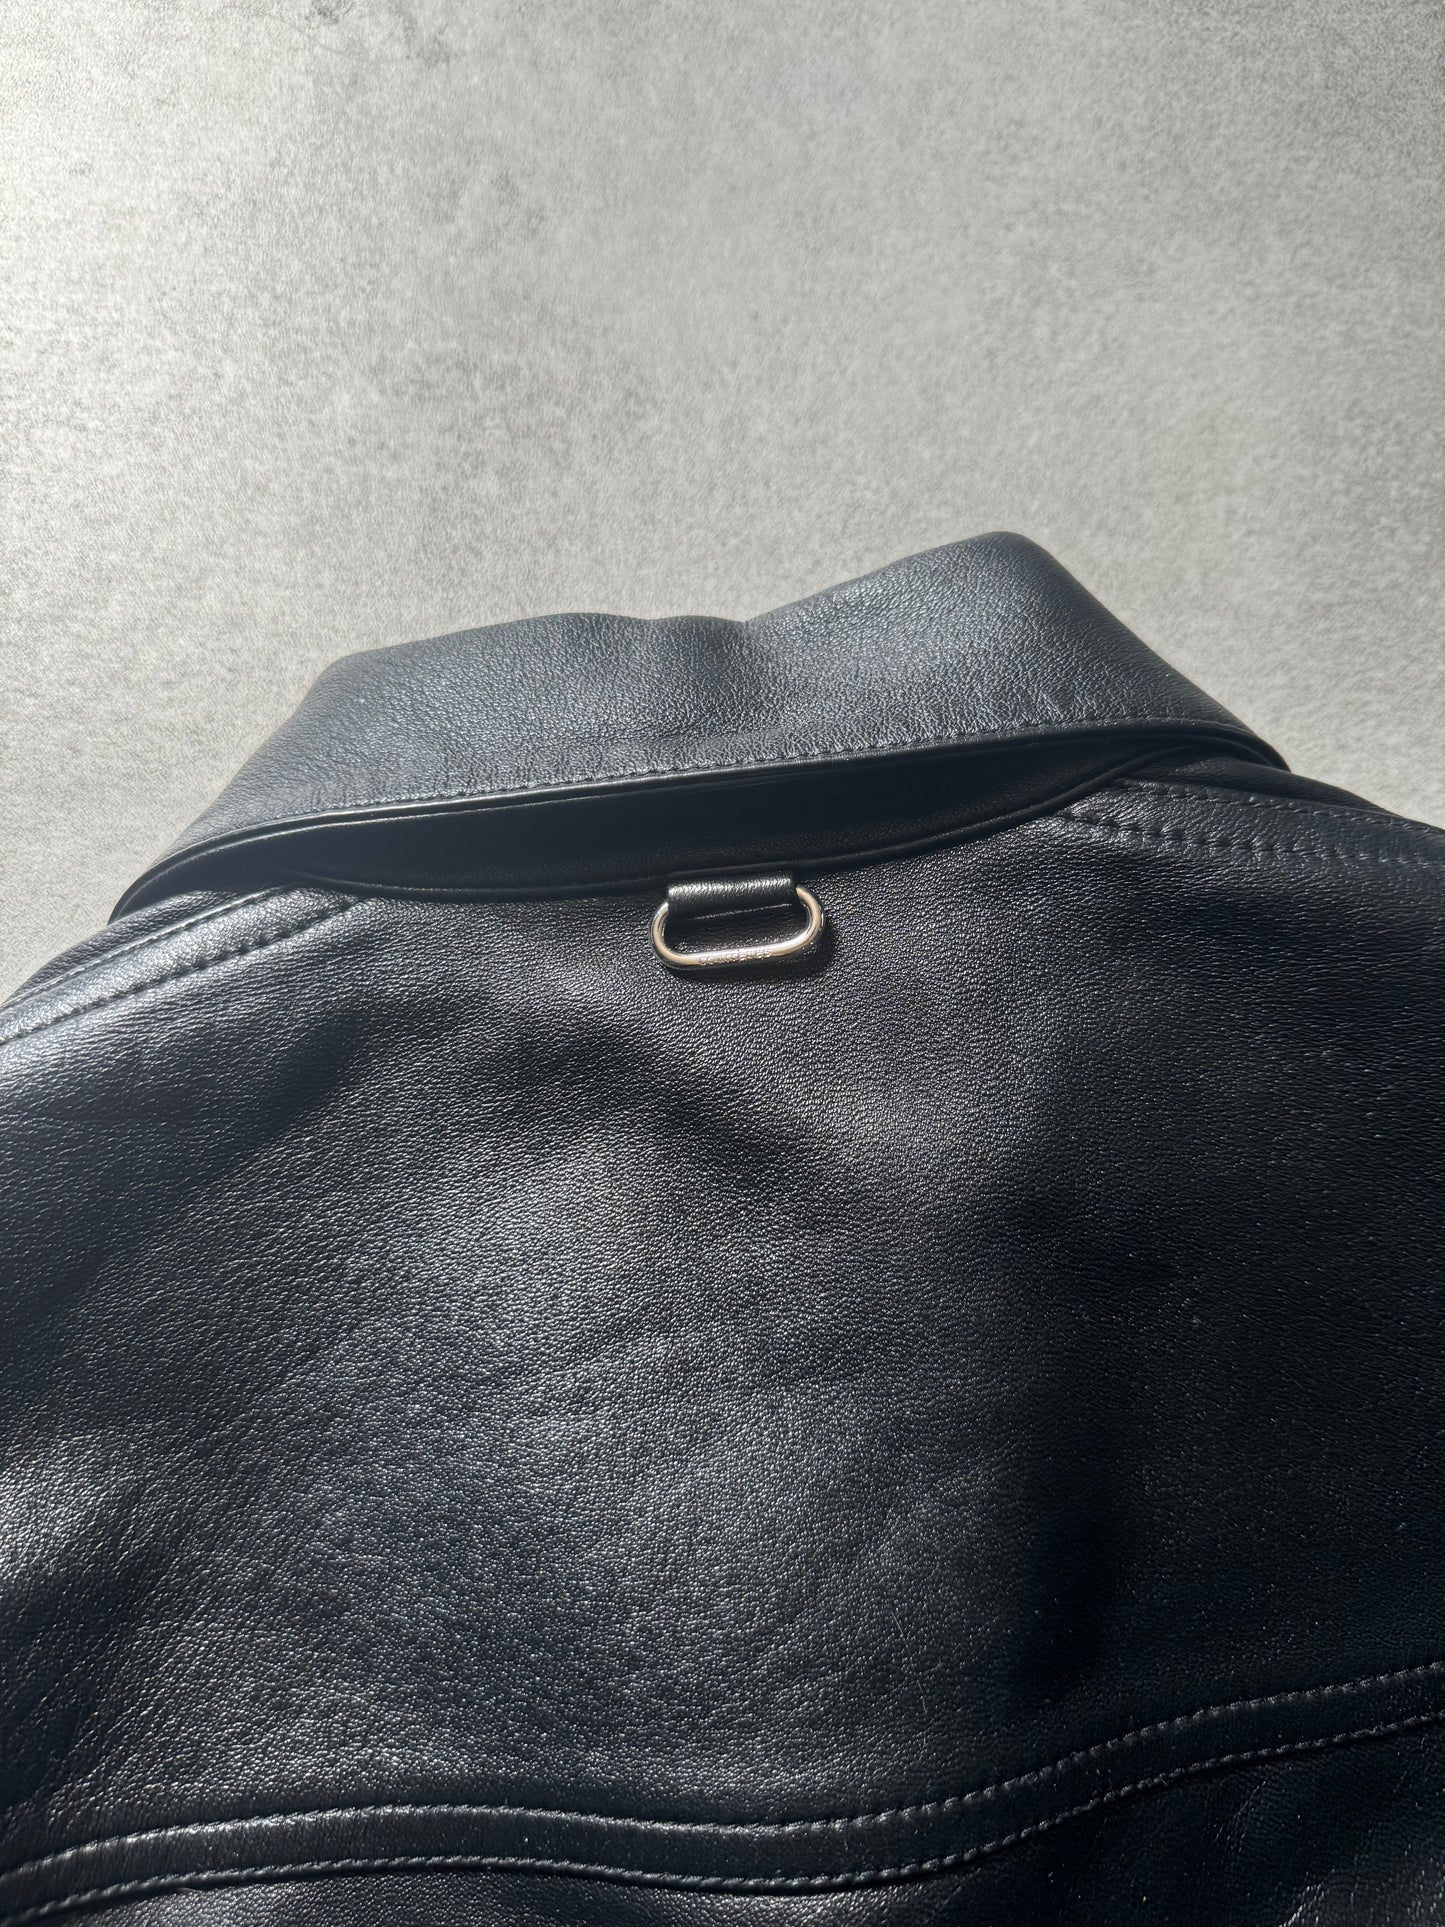 AW2023 Courrèges Worker Black Minimalist Leather Jacket (L) - 6